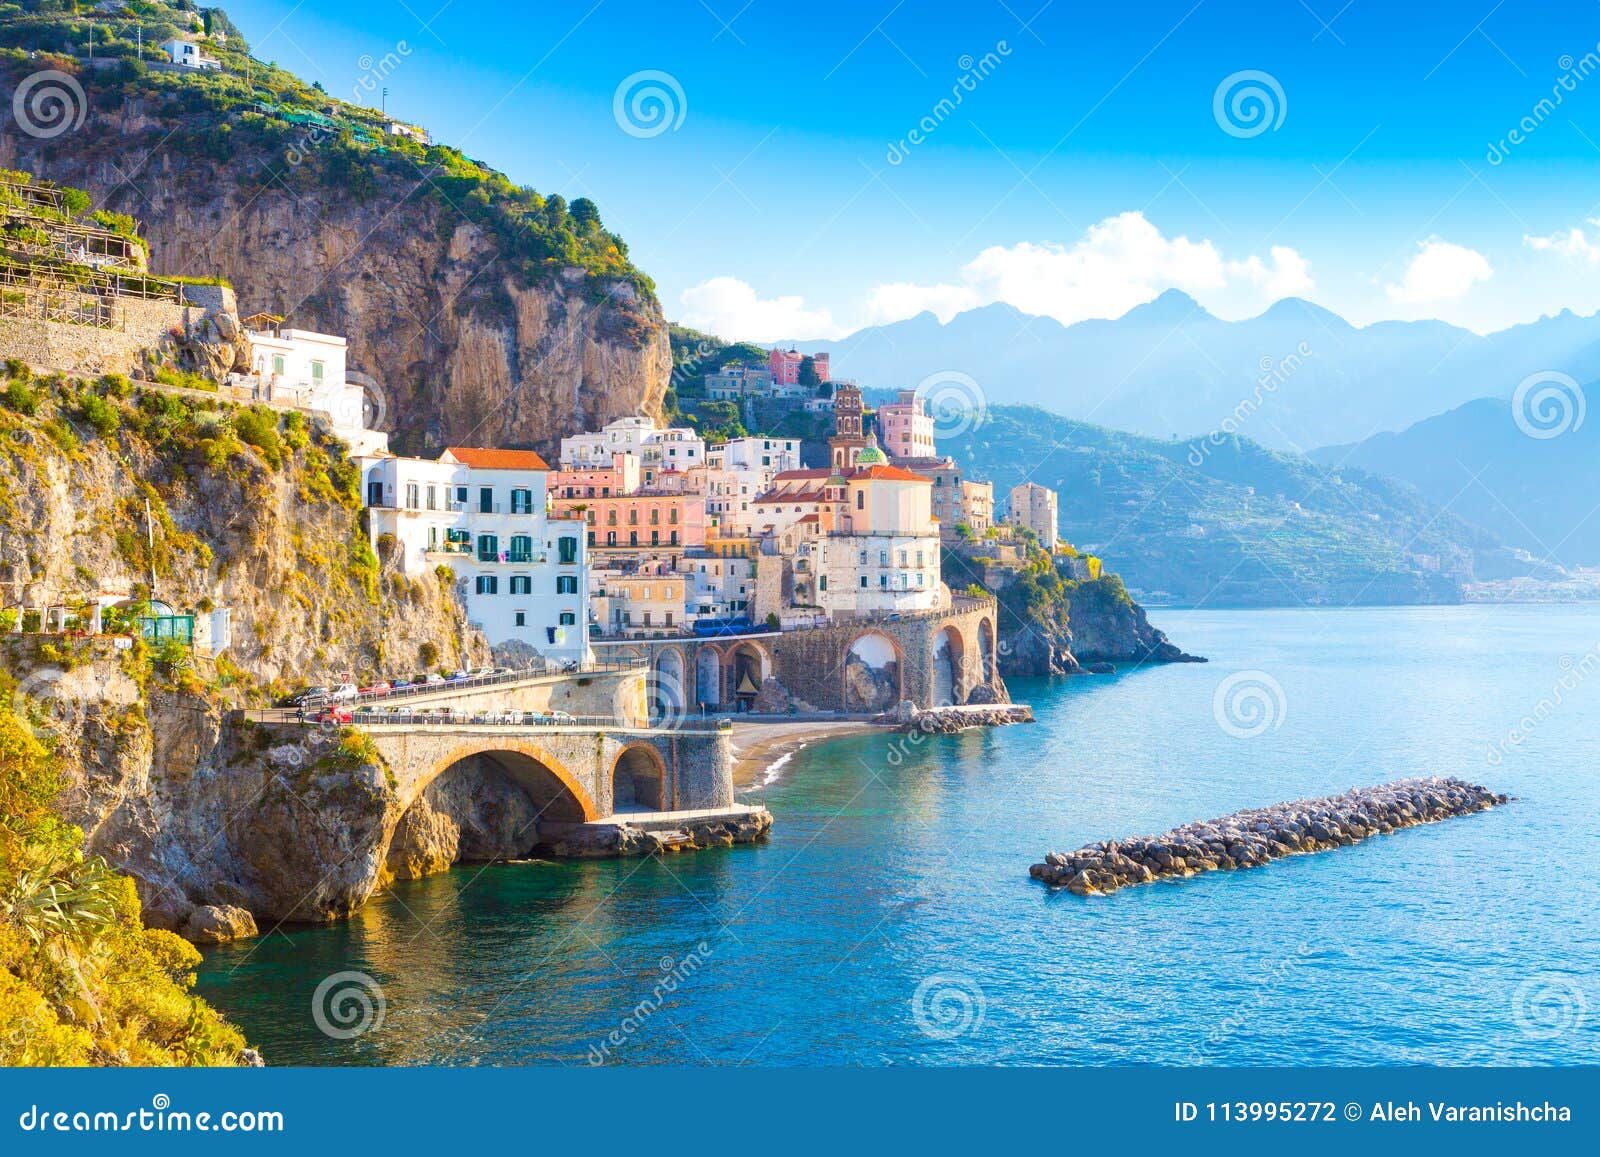 amalfi cityscape on coast line of mediterranean sea, italy